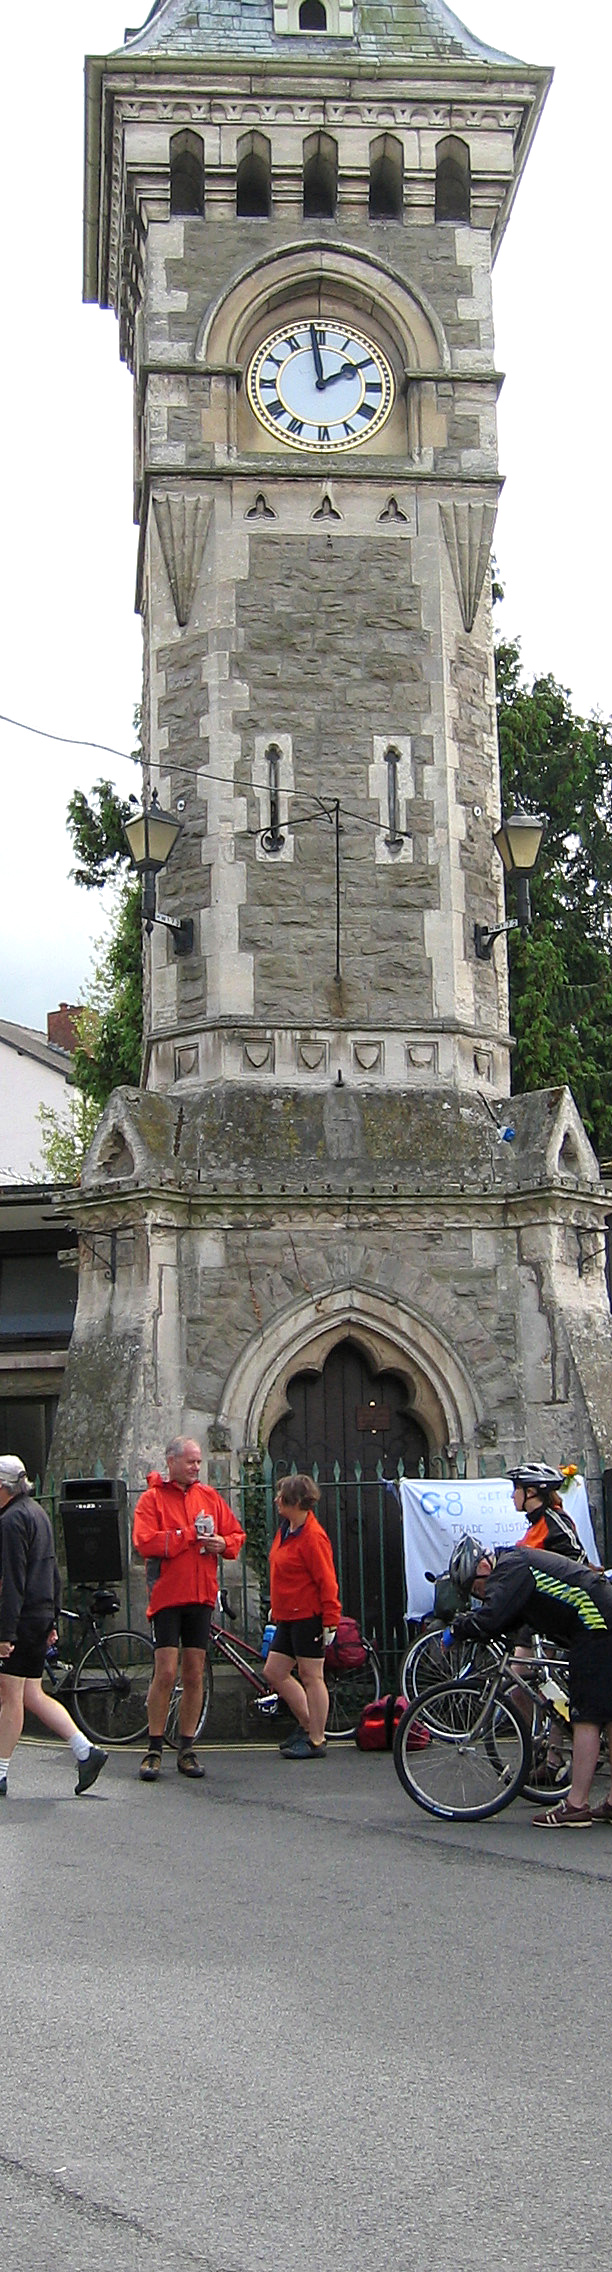 The clocktower in Hay-on-Wye